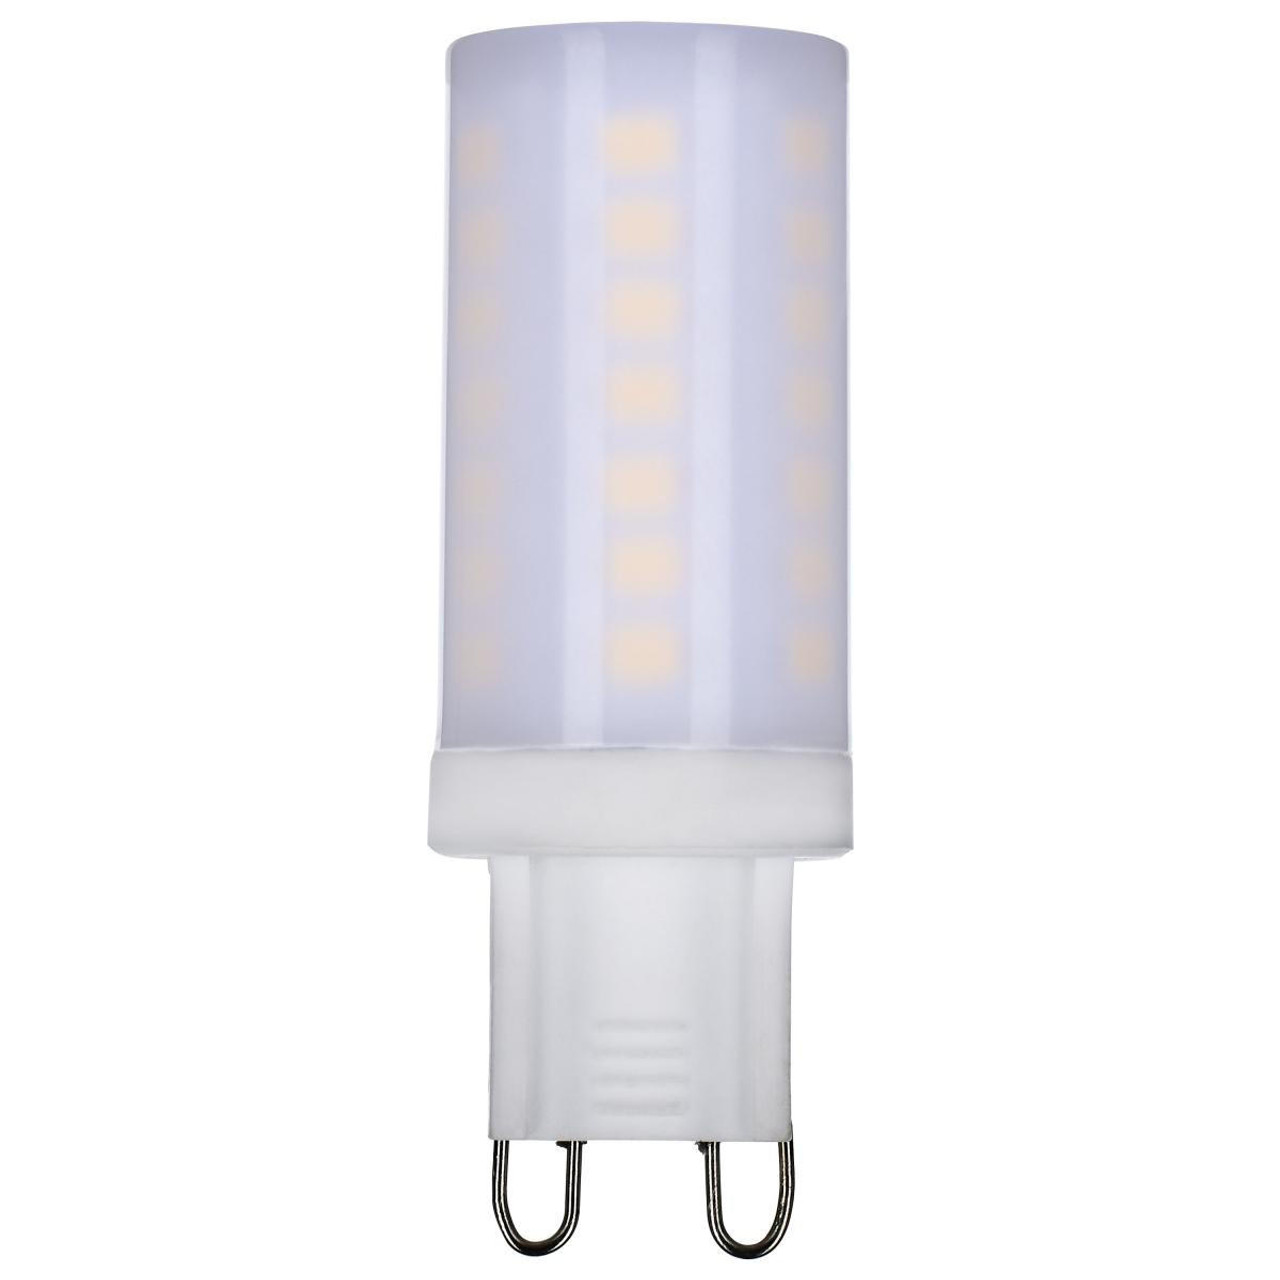 Satco S11237, 5W LED JCD T4 Light Bulb